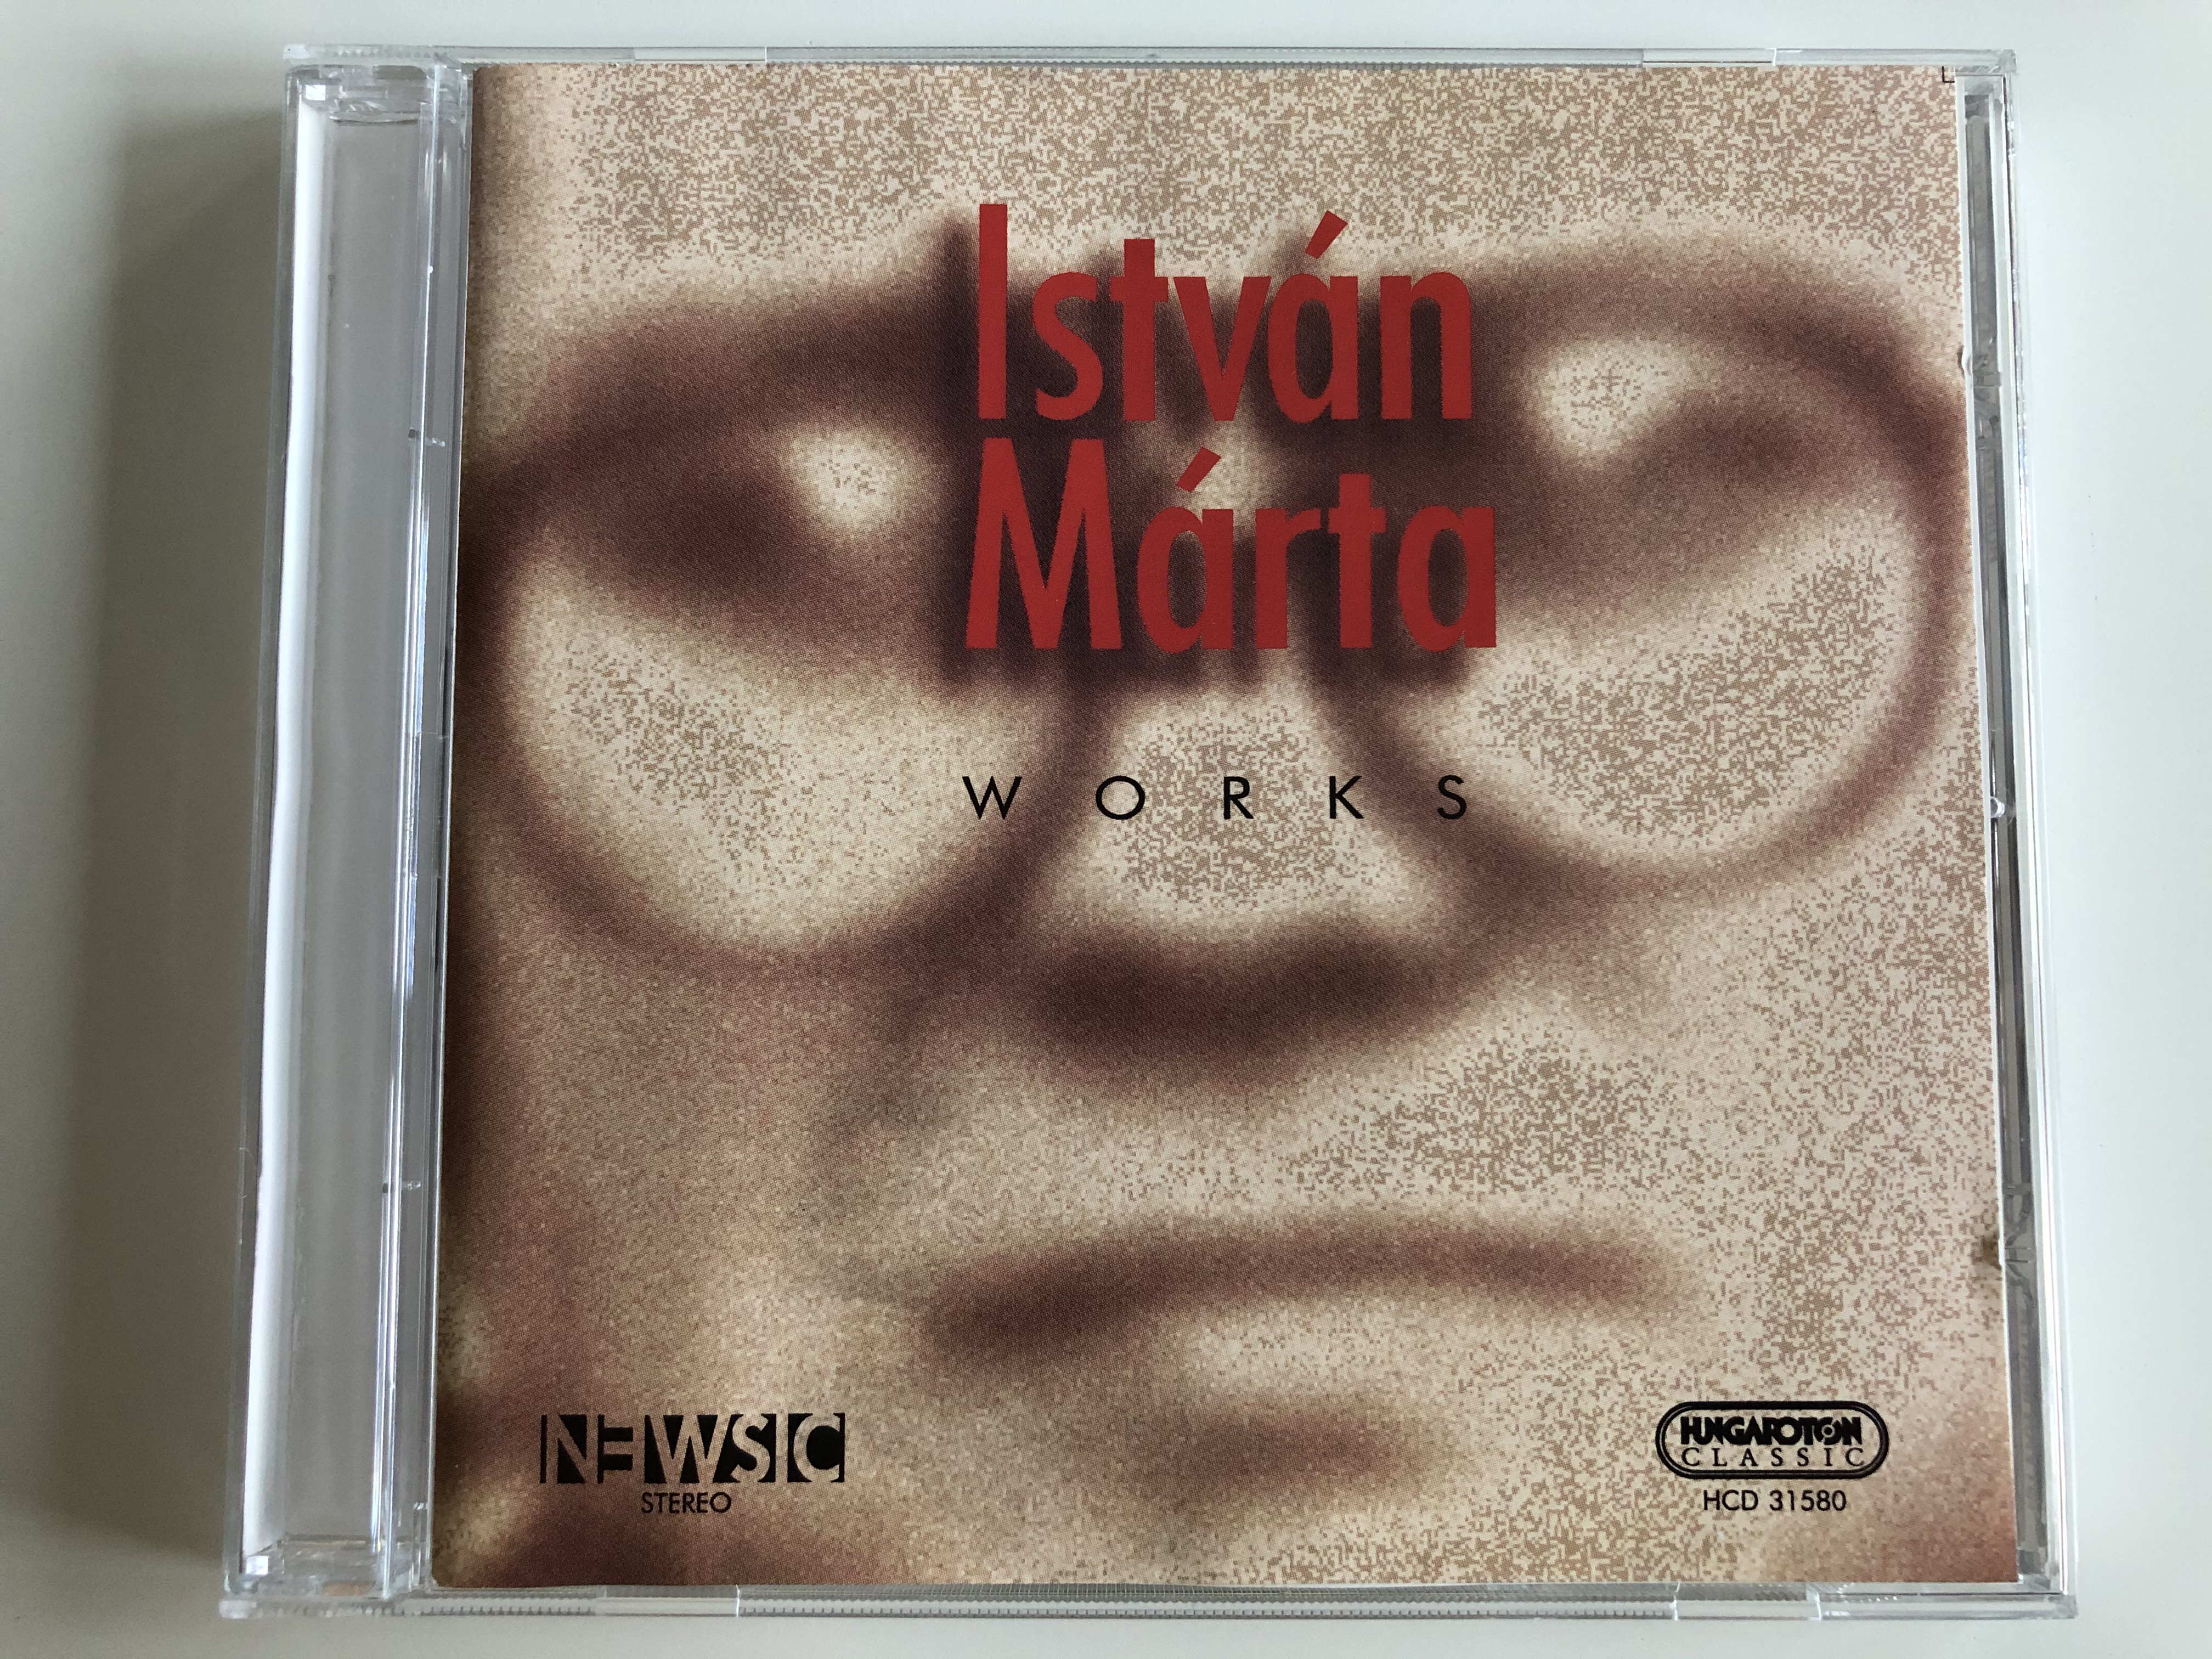 istv-n-m-rta-works-hungaroton-classic-audio-cd-1994-stereo-hcd-31580-1-.jpg